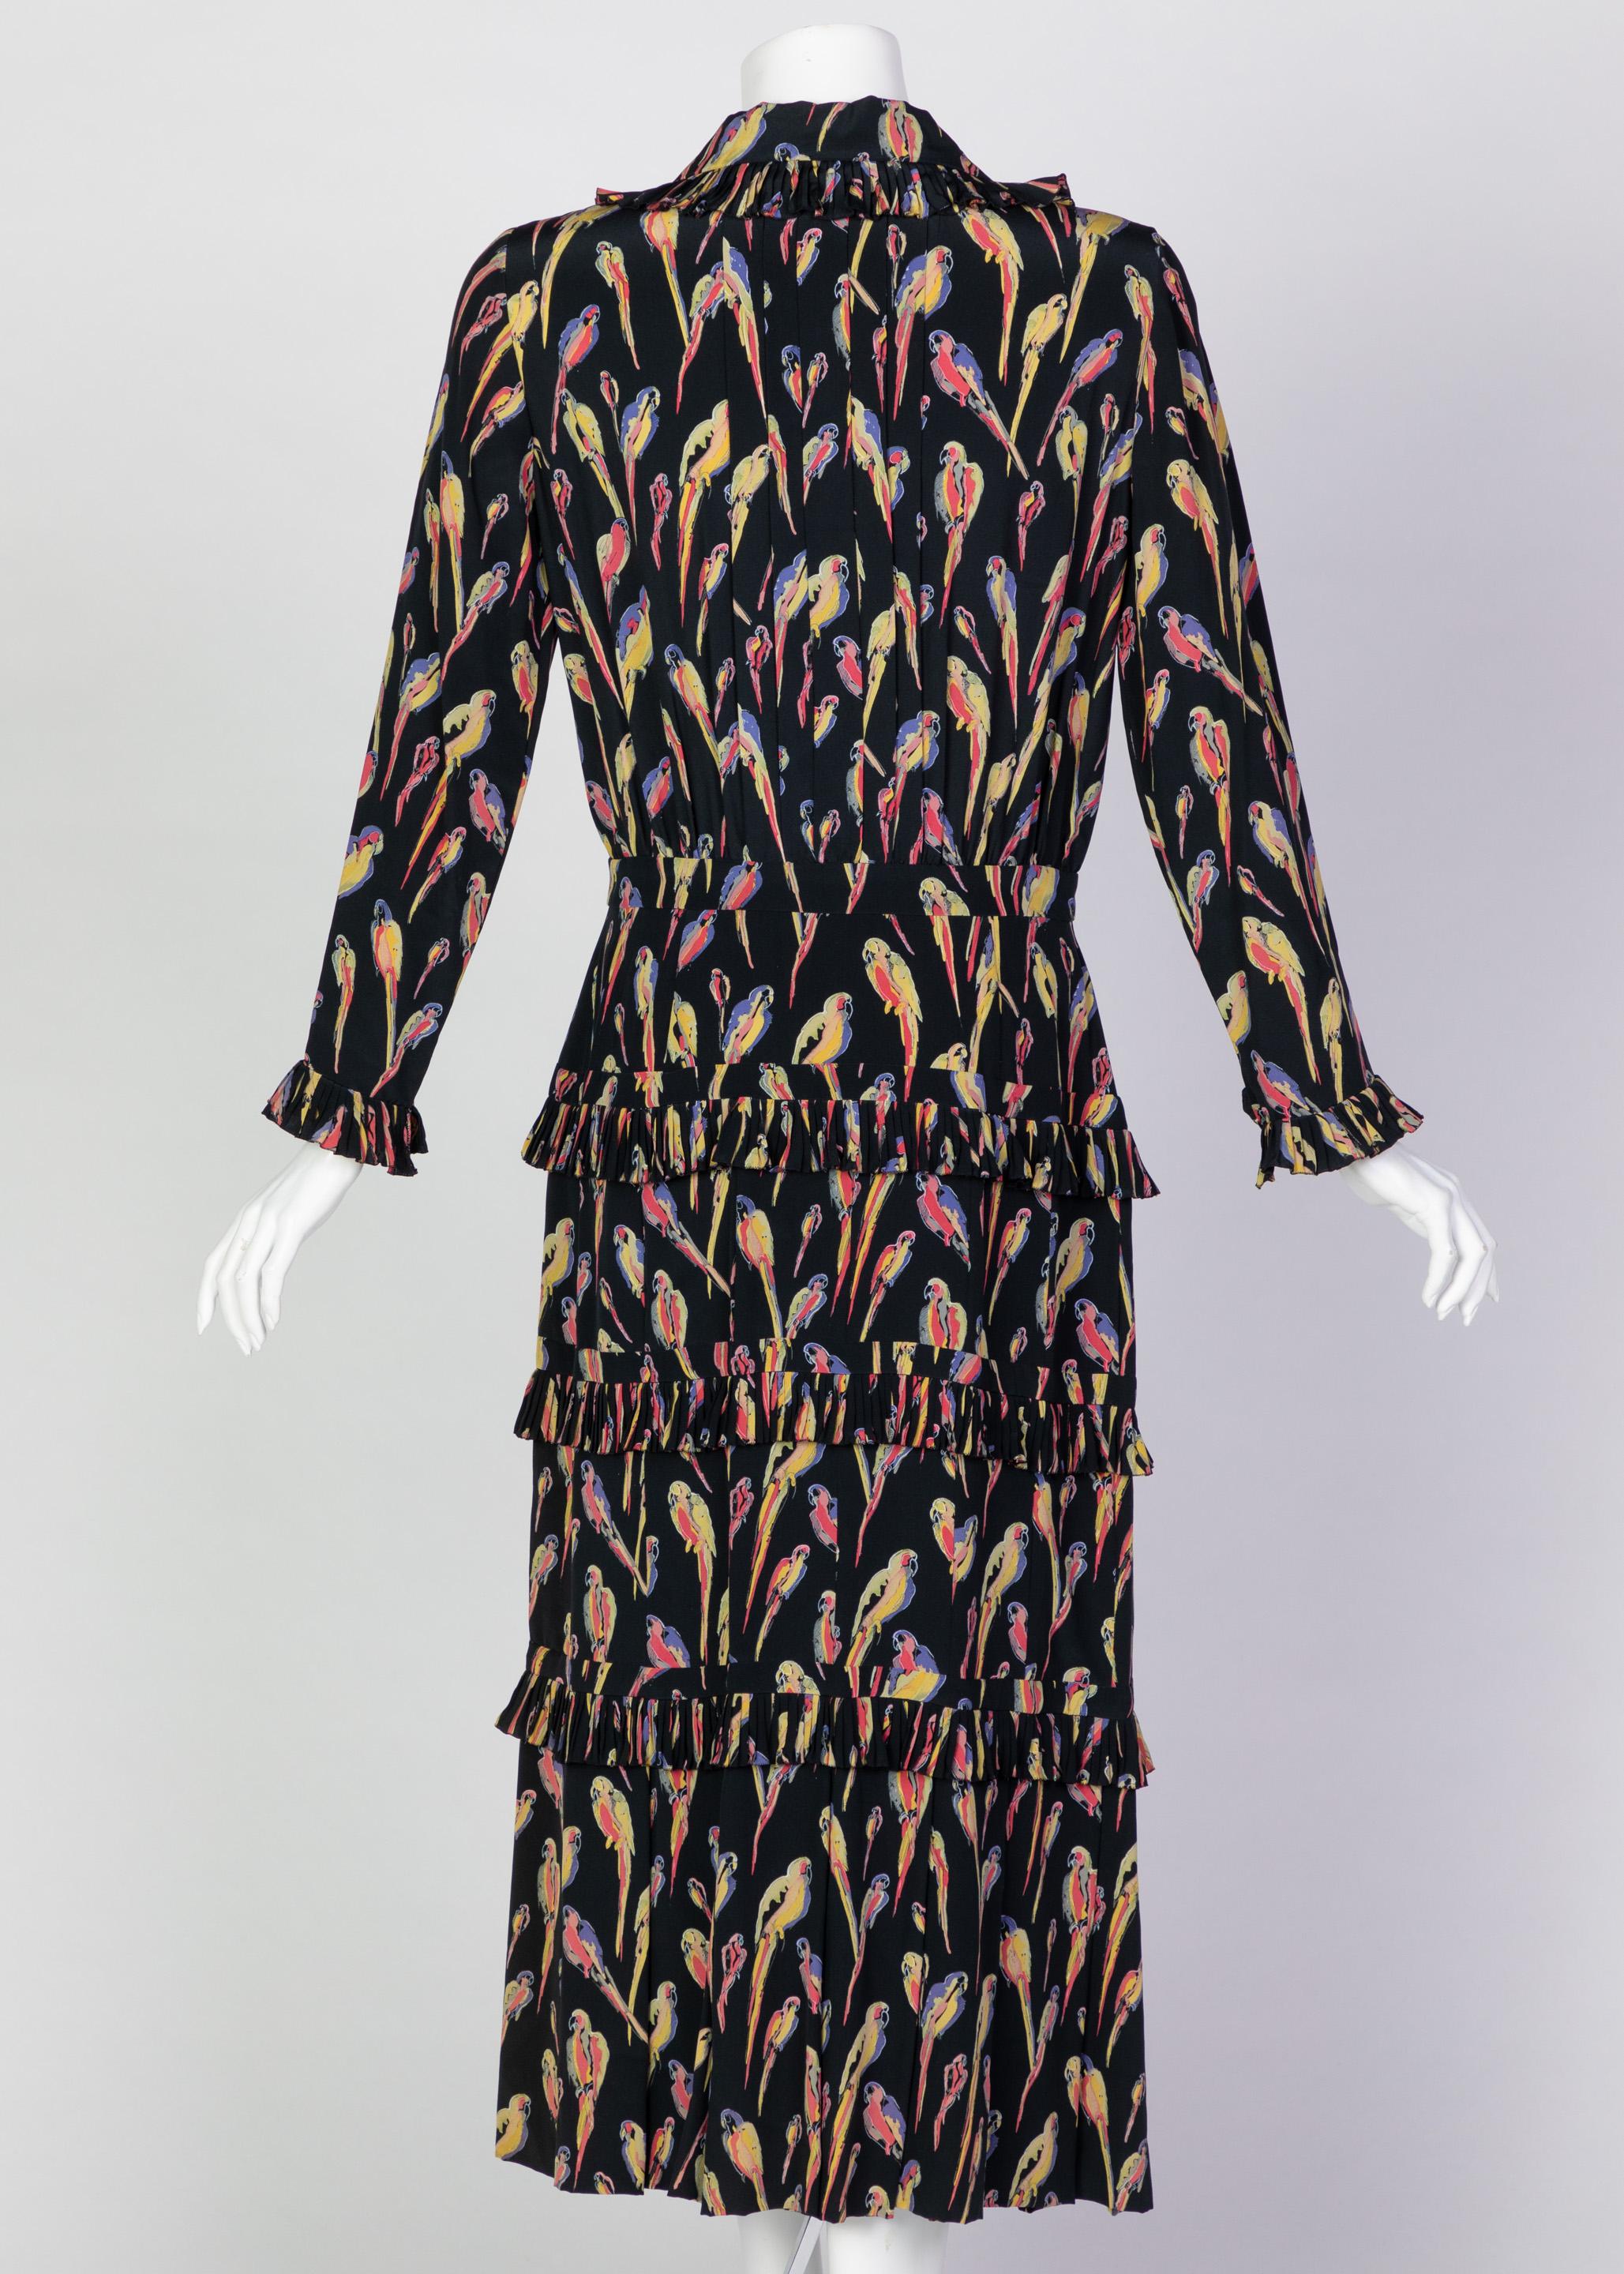 Chanel Black Silk Colorful Bird Print Gold Button Dress, 1980s 1